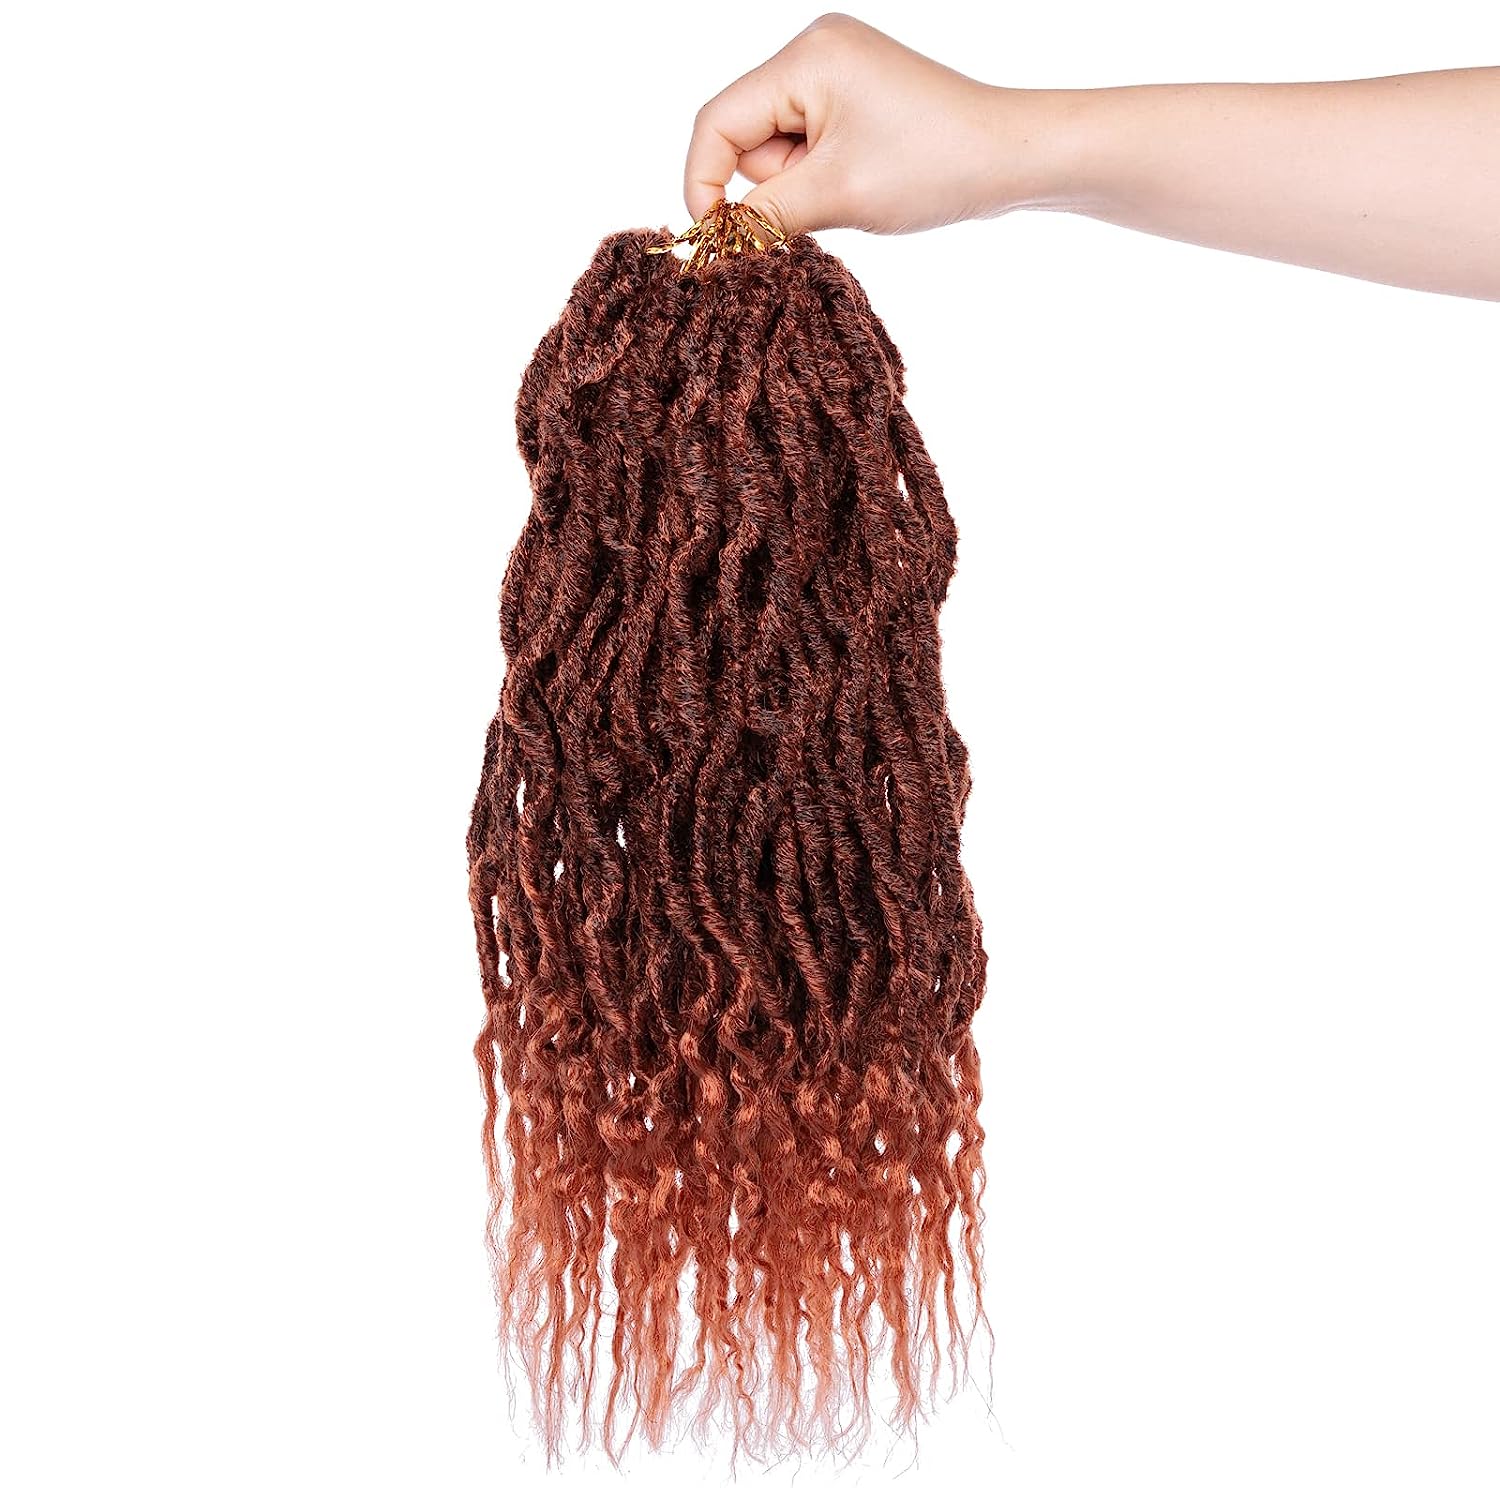 Wavy Locs Crochet Hair 16-24 Inch All Colors | Pre-Looped, Handmade Crochet Synthetic Braiding Hair